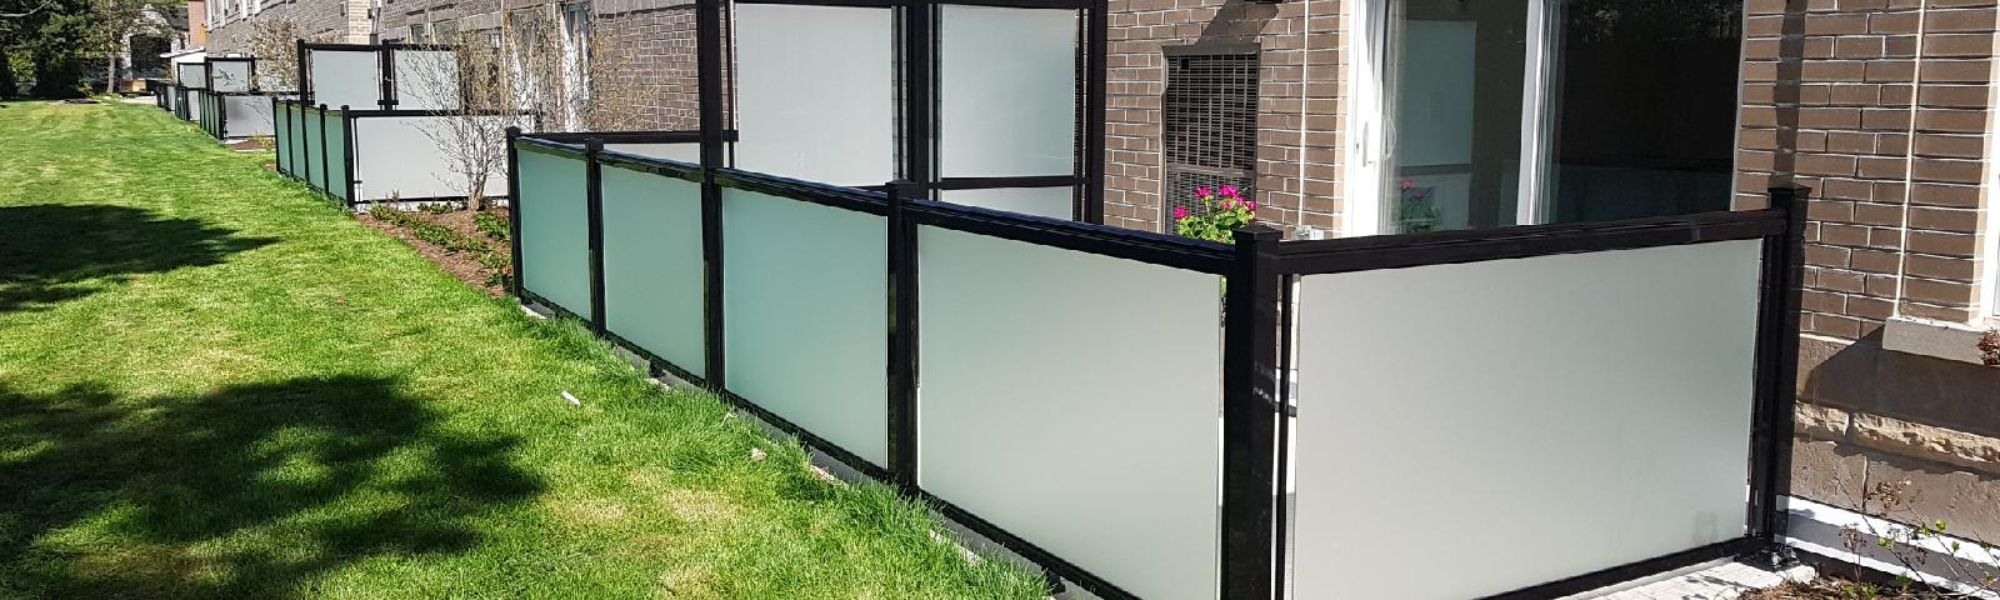 aluminum privacy screen outdoor